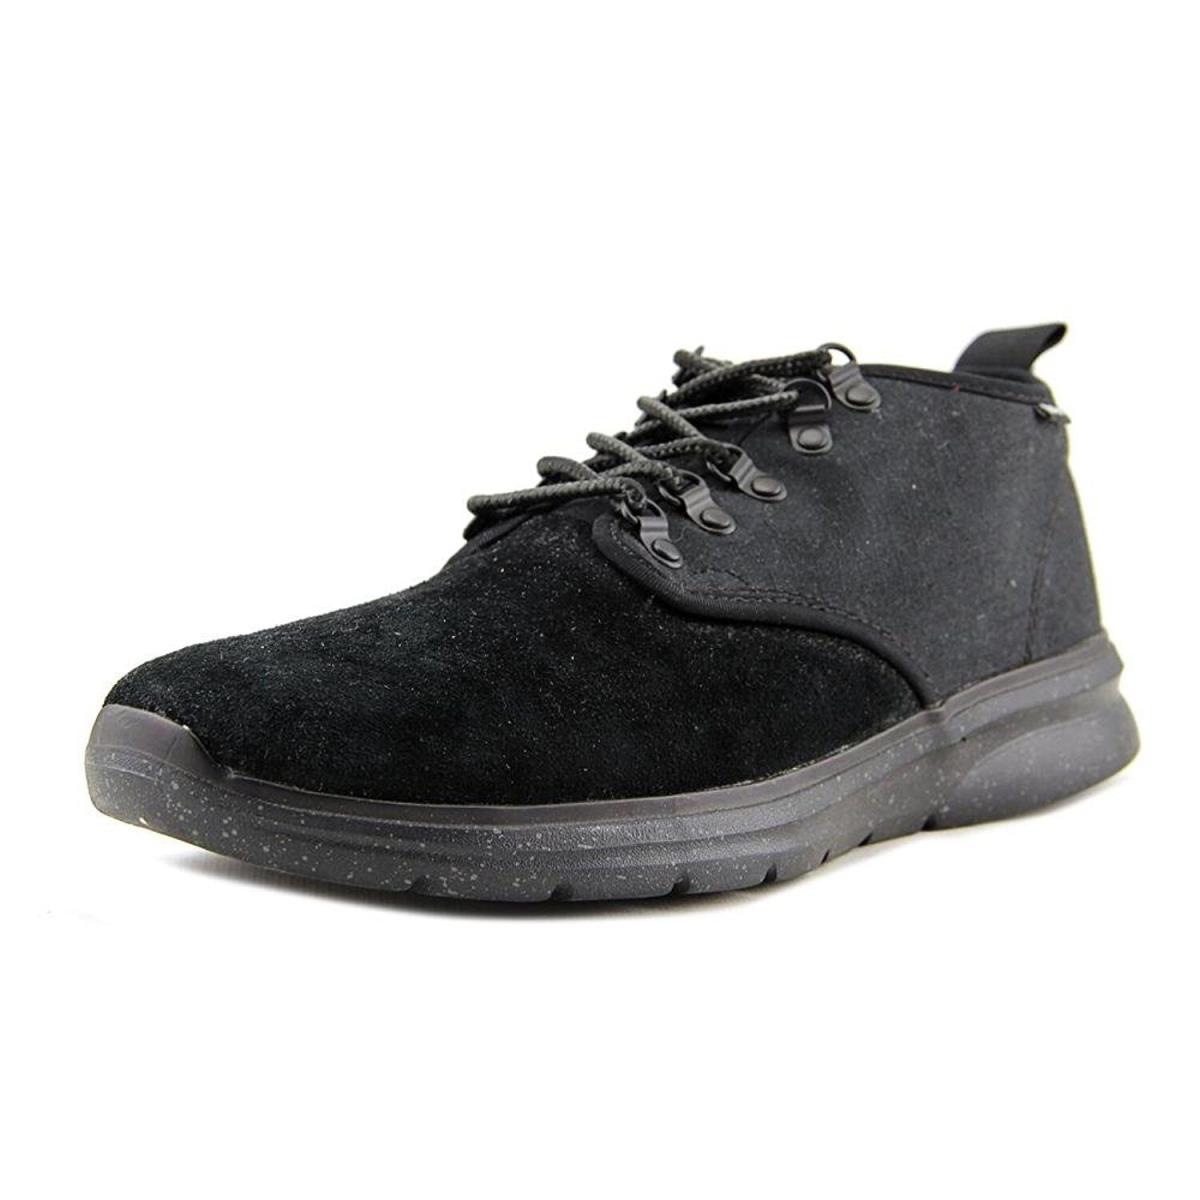 Vans Unisex Iso 2 Mid Round Toe Skate Shoe Black Charcoal Men Size 10 10.5 US